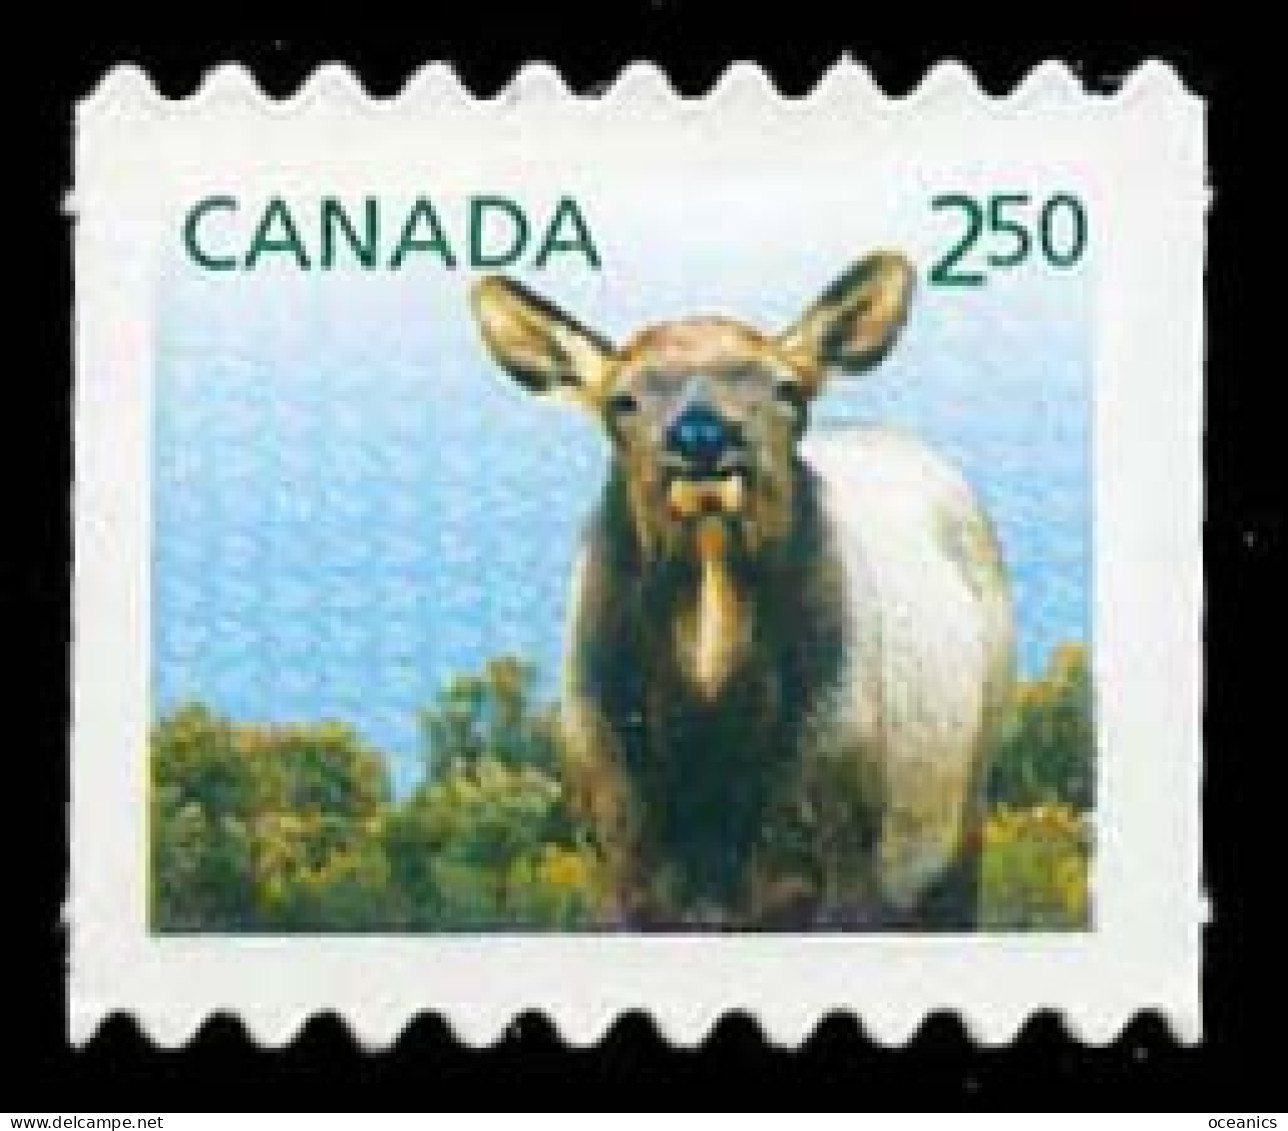 Canada (Scott No.2717 - Faune Et Leurs Bébés / Wild Animal's Babies 2014) (o) De Carnet / From Booklet - Used Stamps